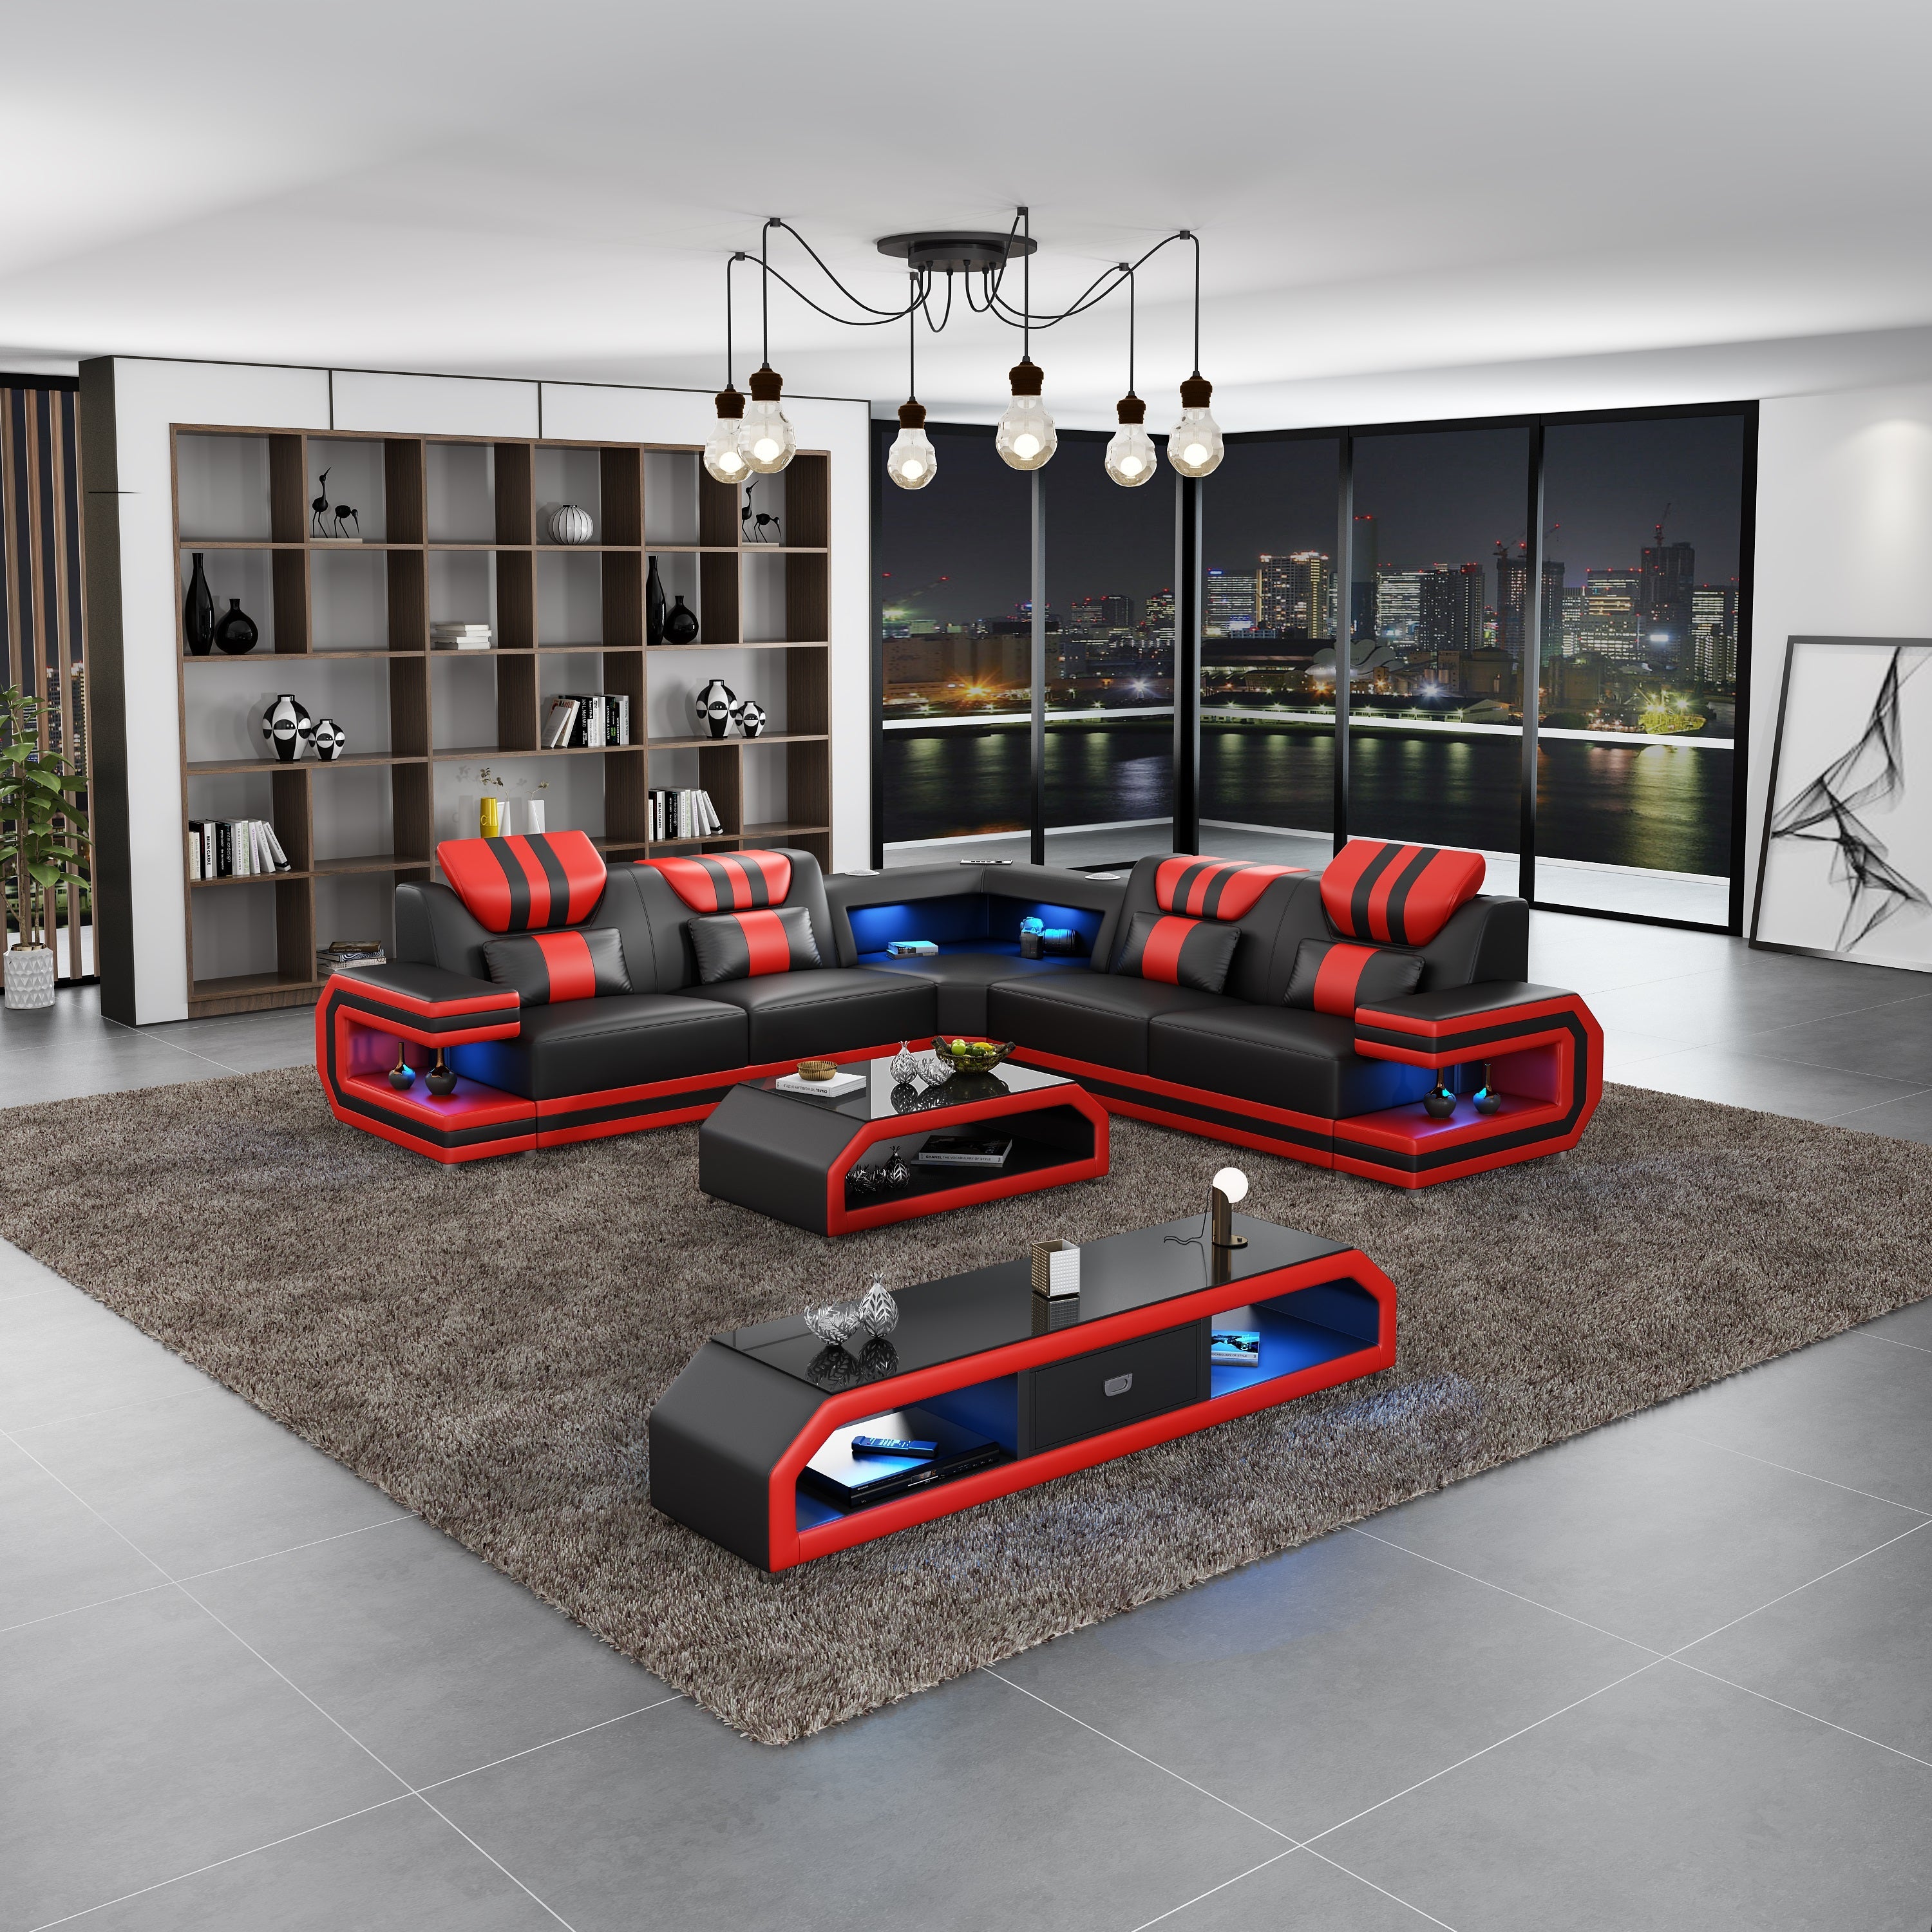 European Furniture - Lightsaber LED Sectional Black Red Italian Leather - LED-87771-BR - New Star Living